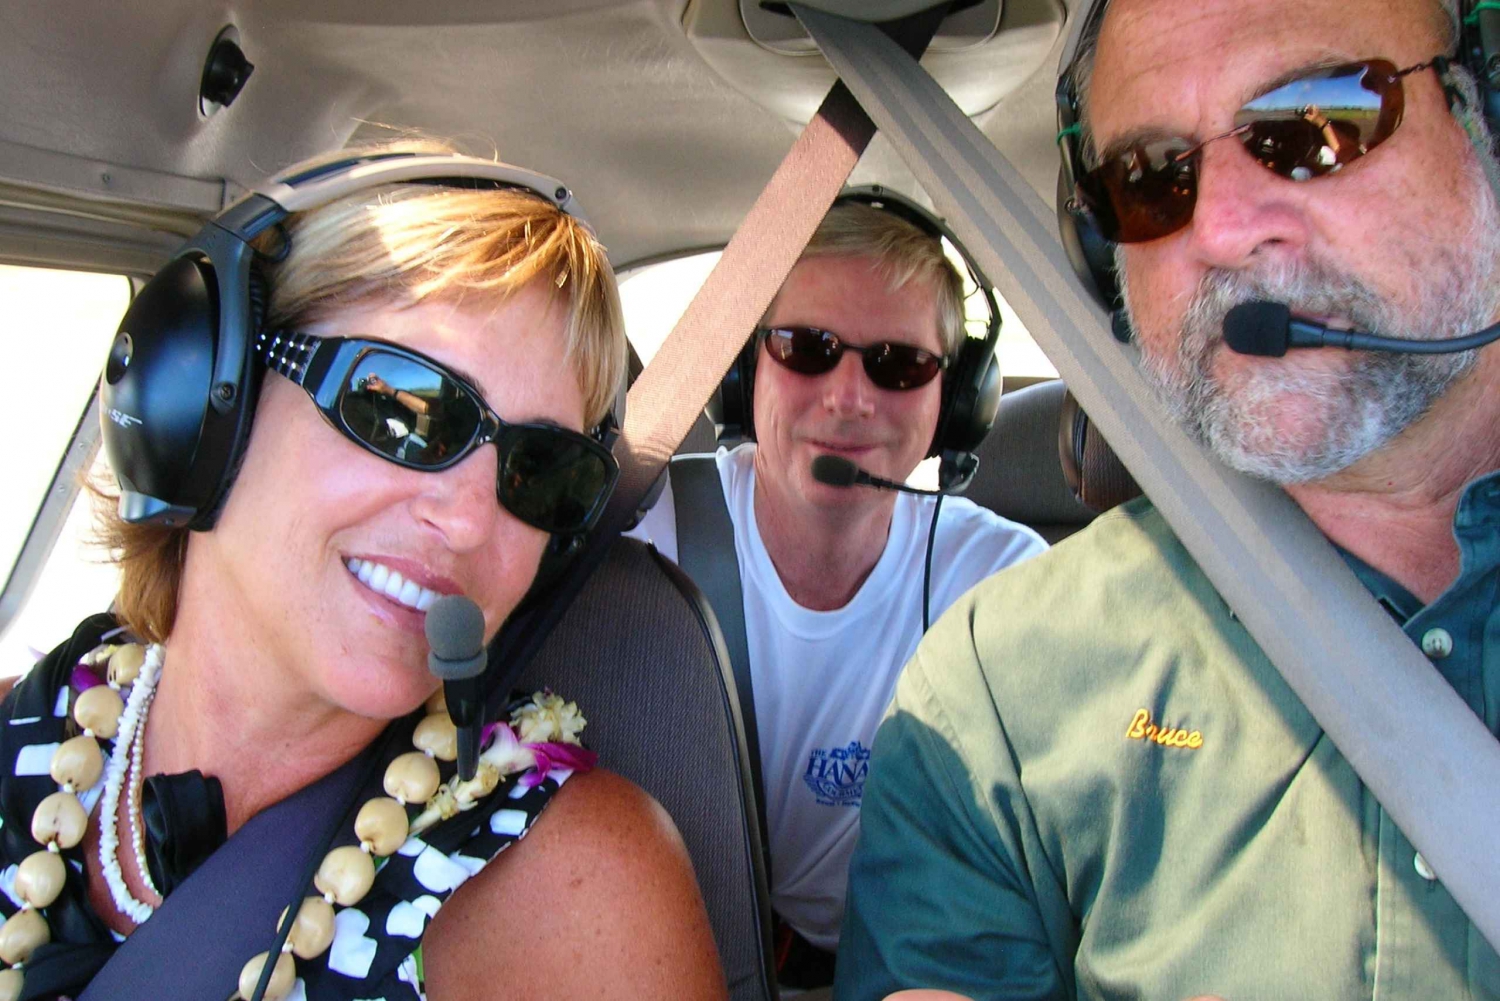 Lihue: Private Scenic Flight over Kauai